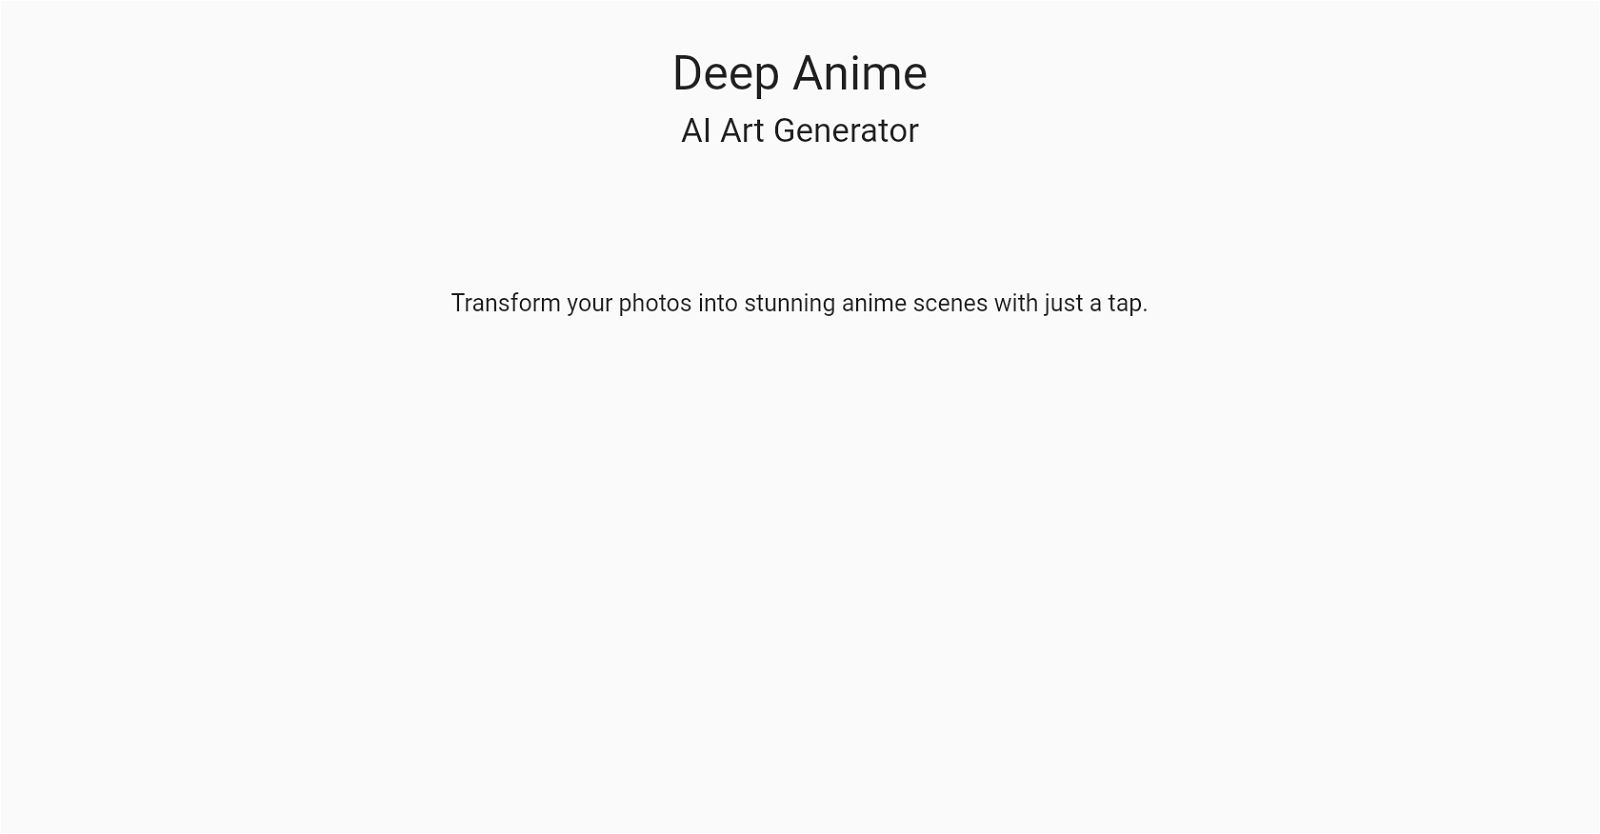 Deep Anime